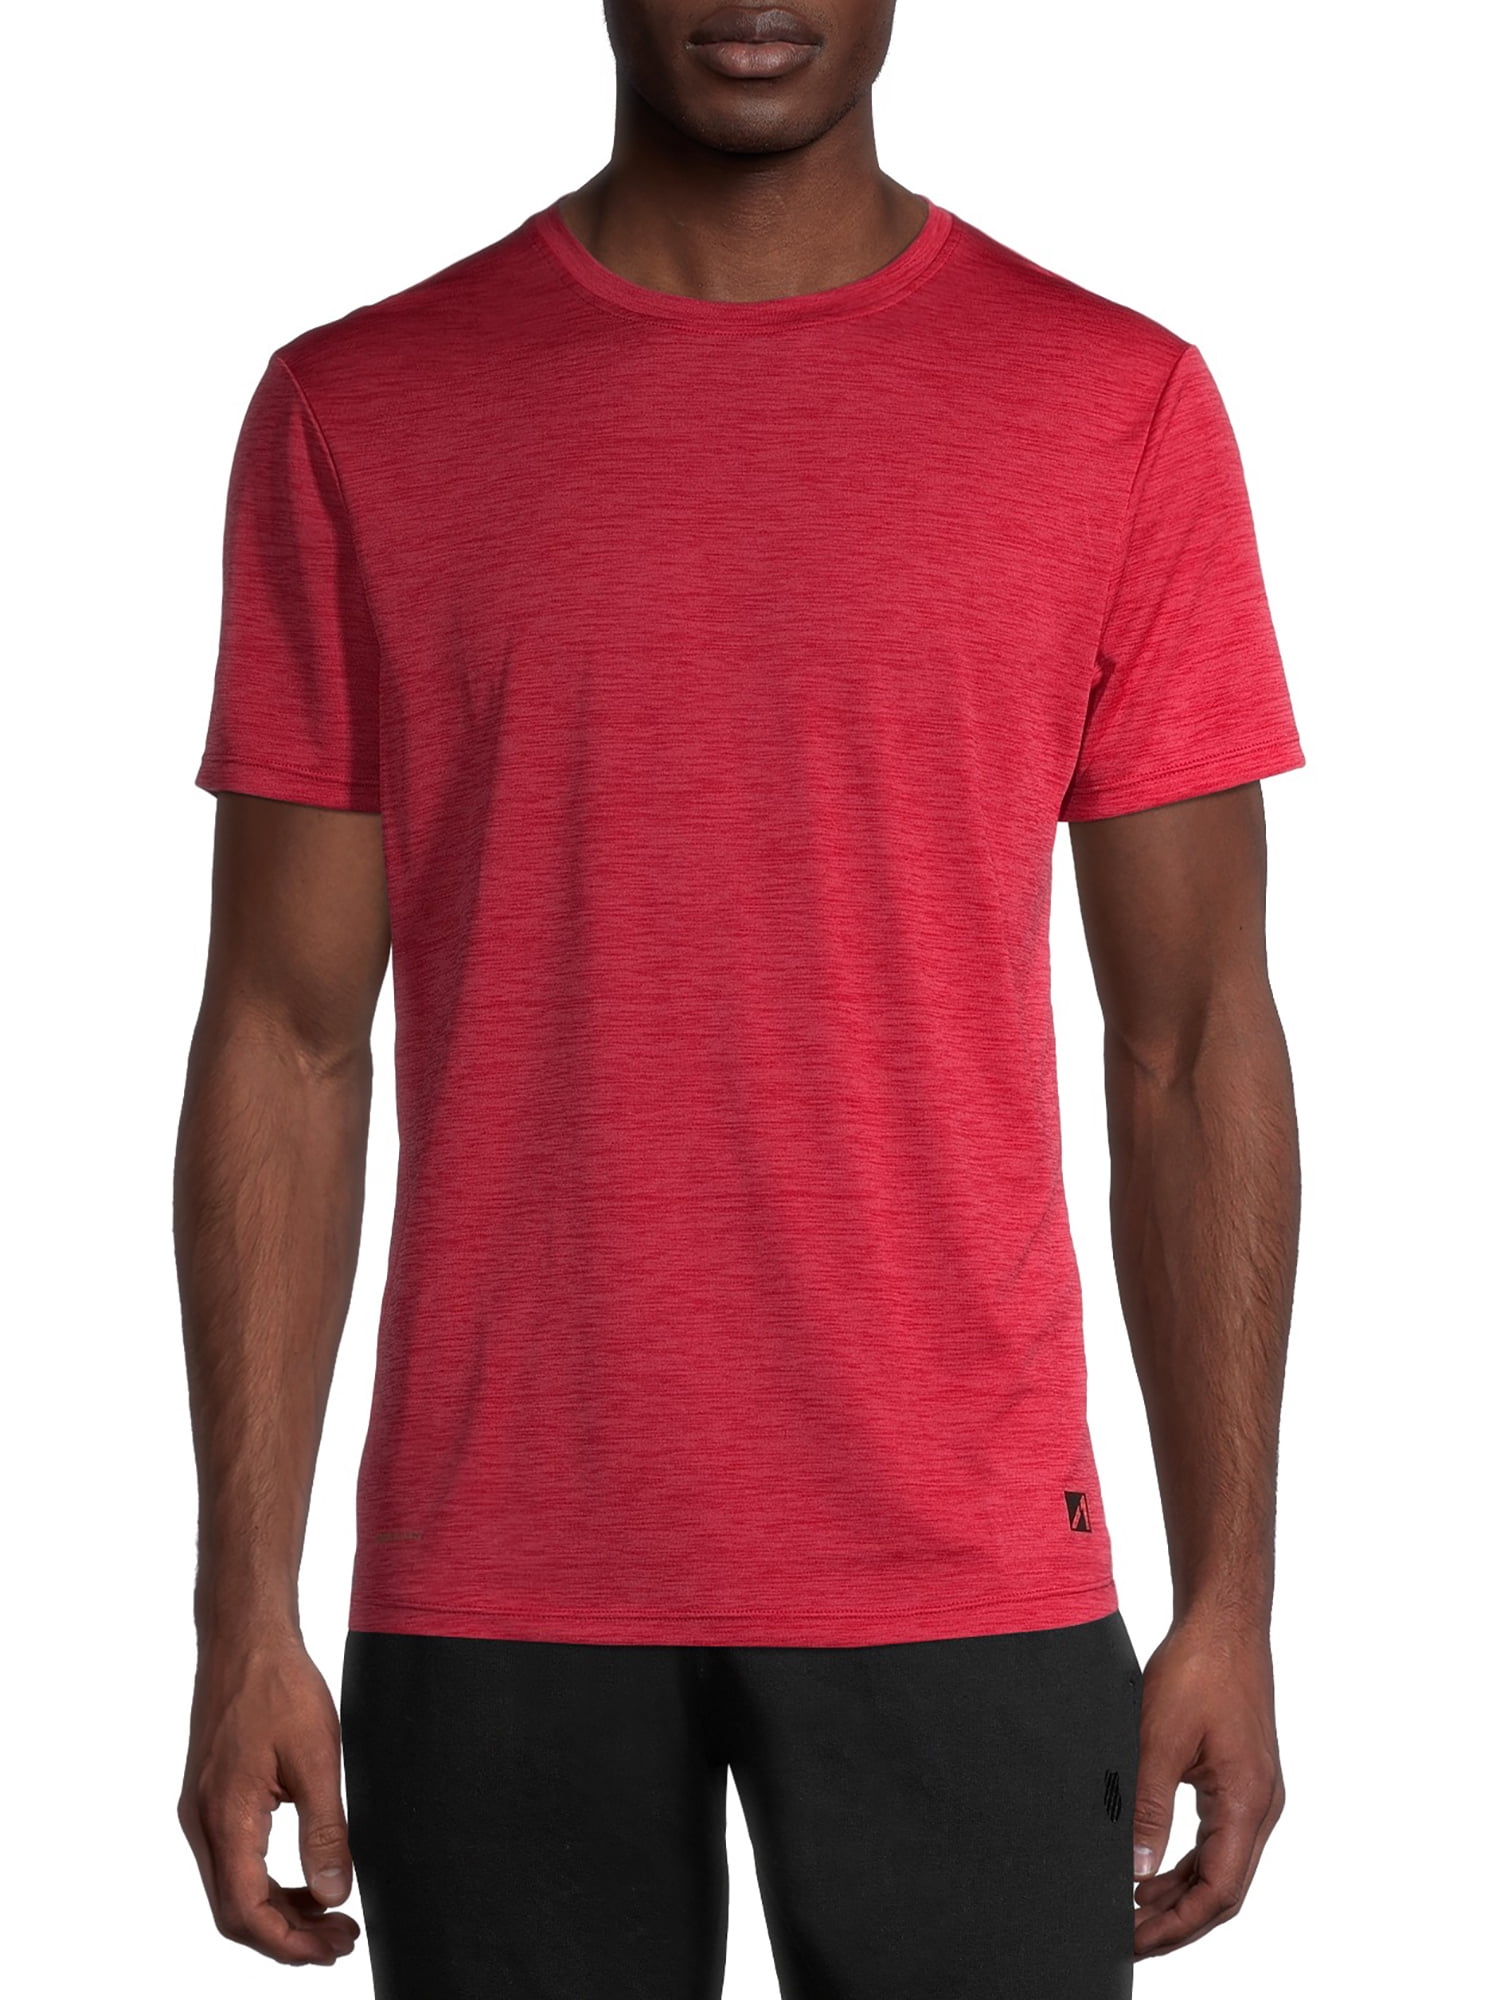 AL1VE Men's Dynamic Athletic T-Shirt - Walmart.com